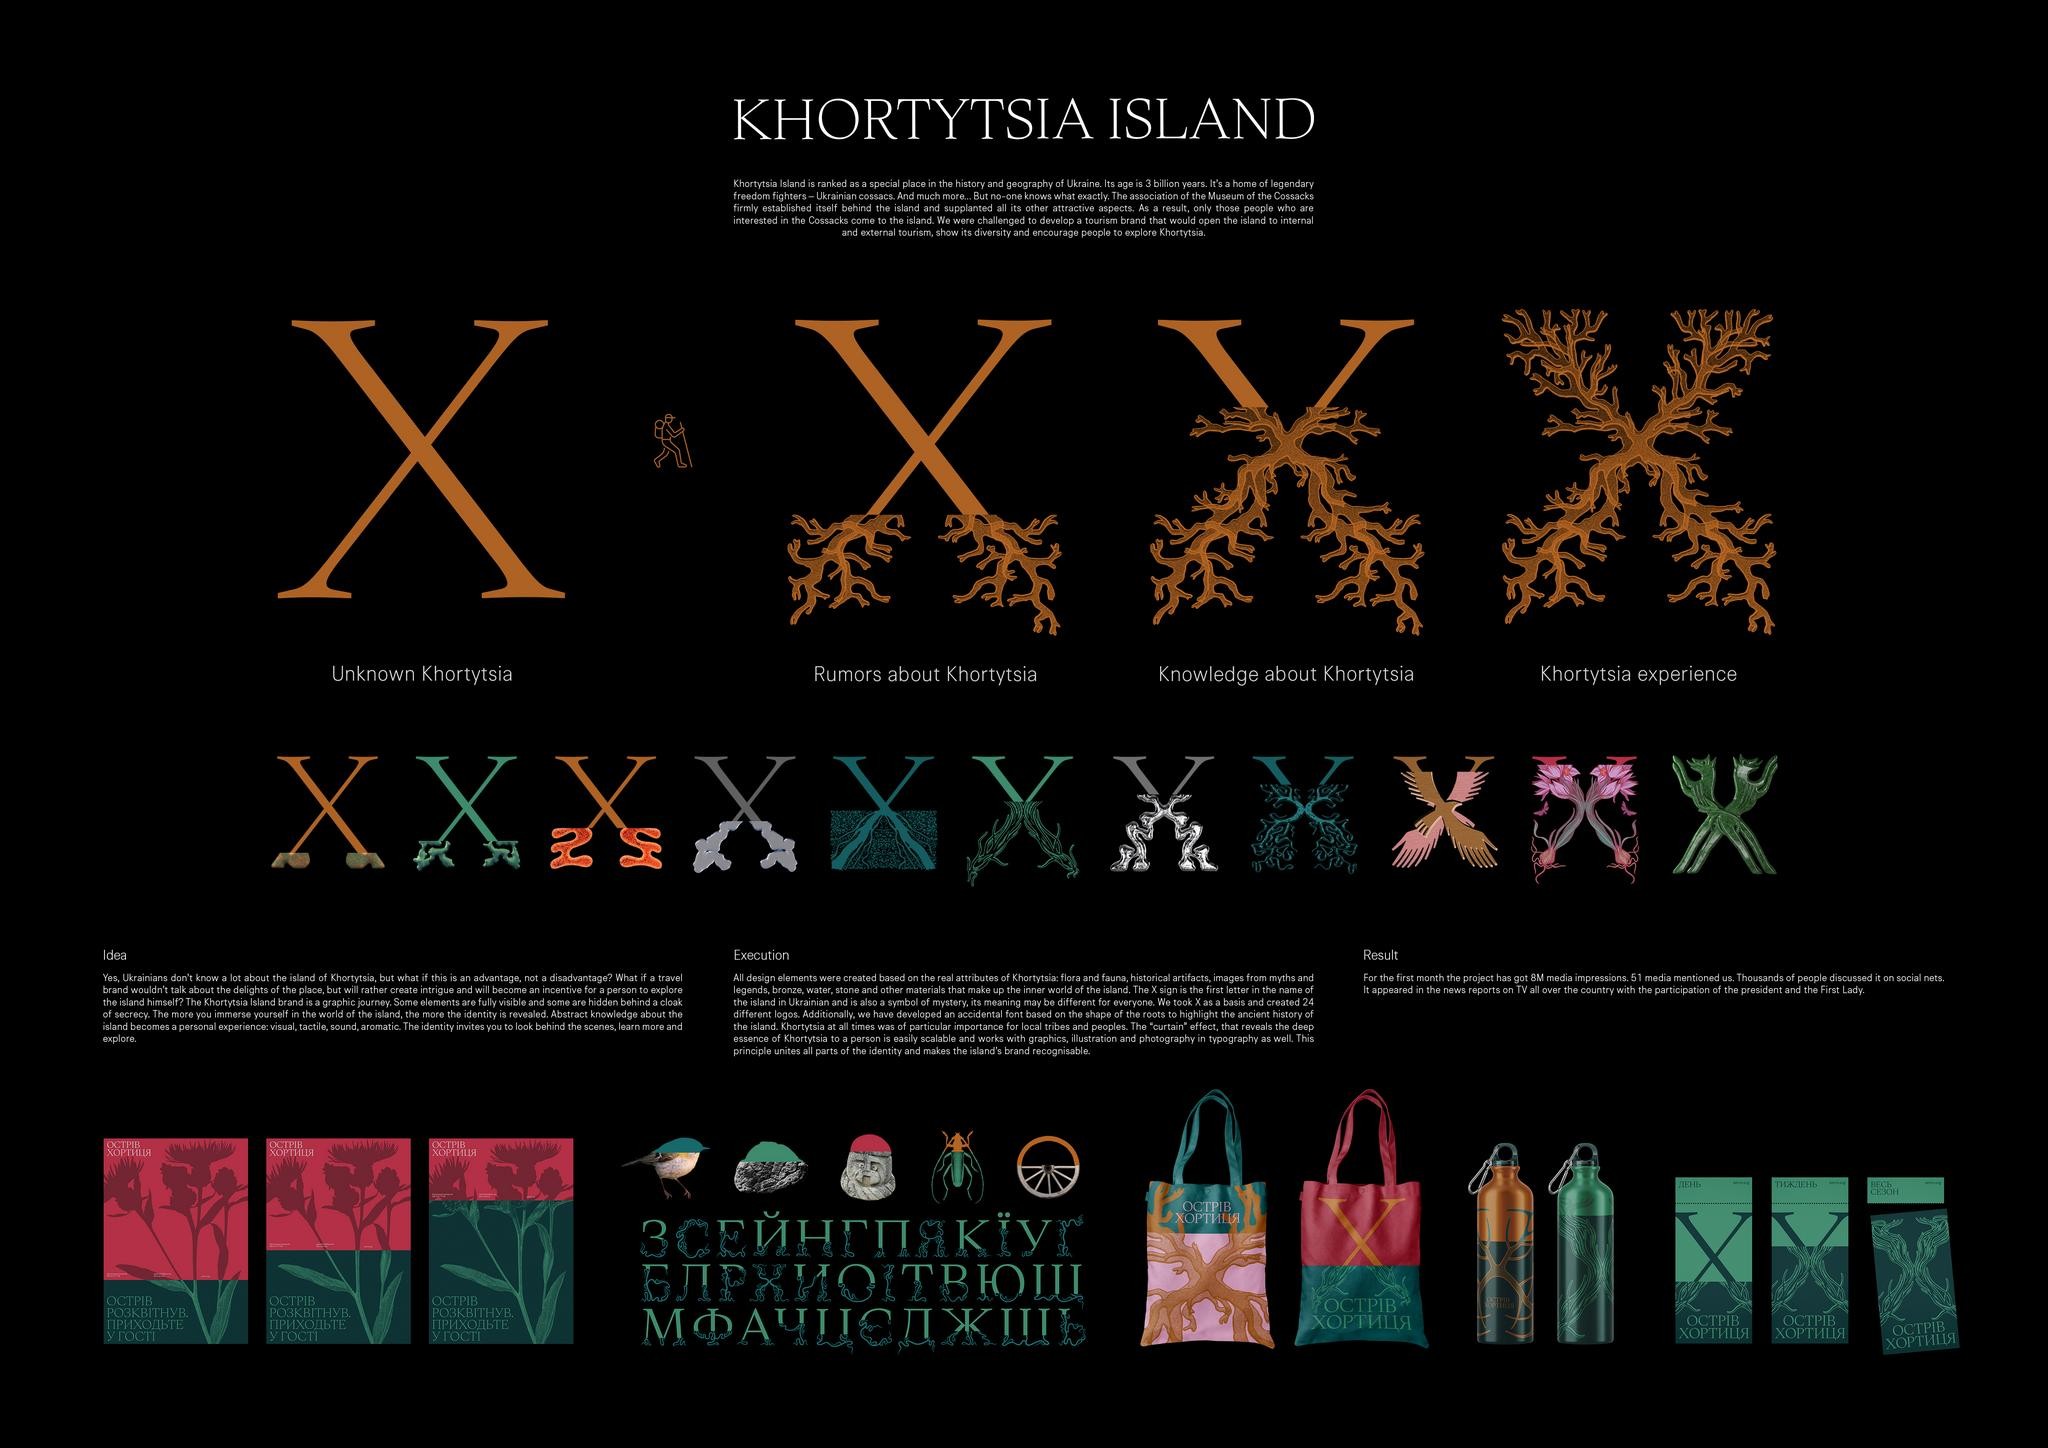 KHORTYTSIA - THE ISLAND OF A MYSTERY